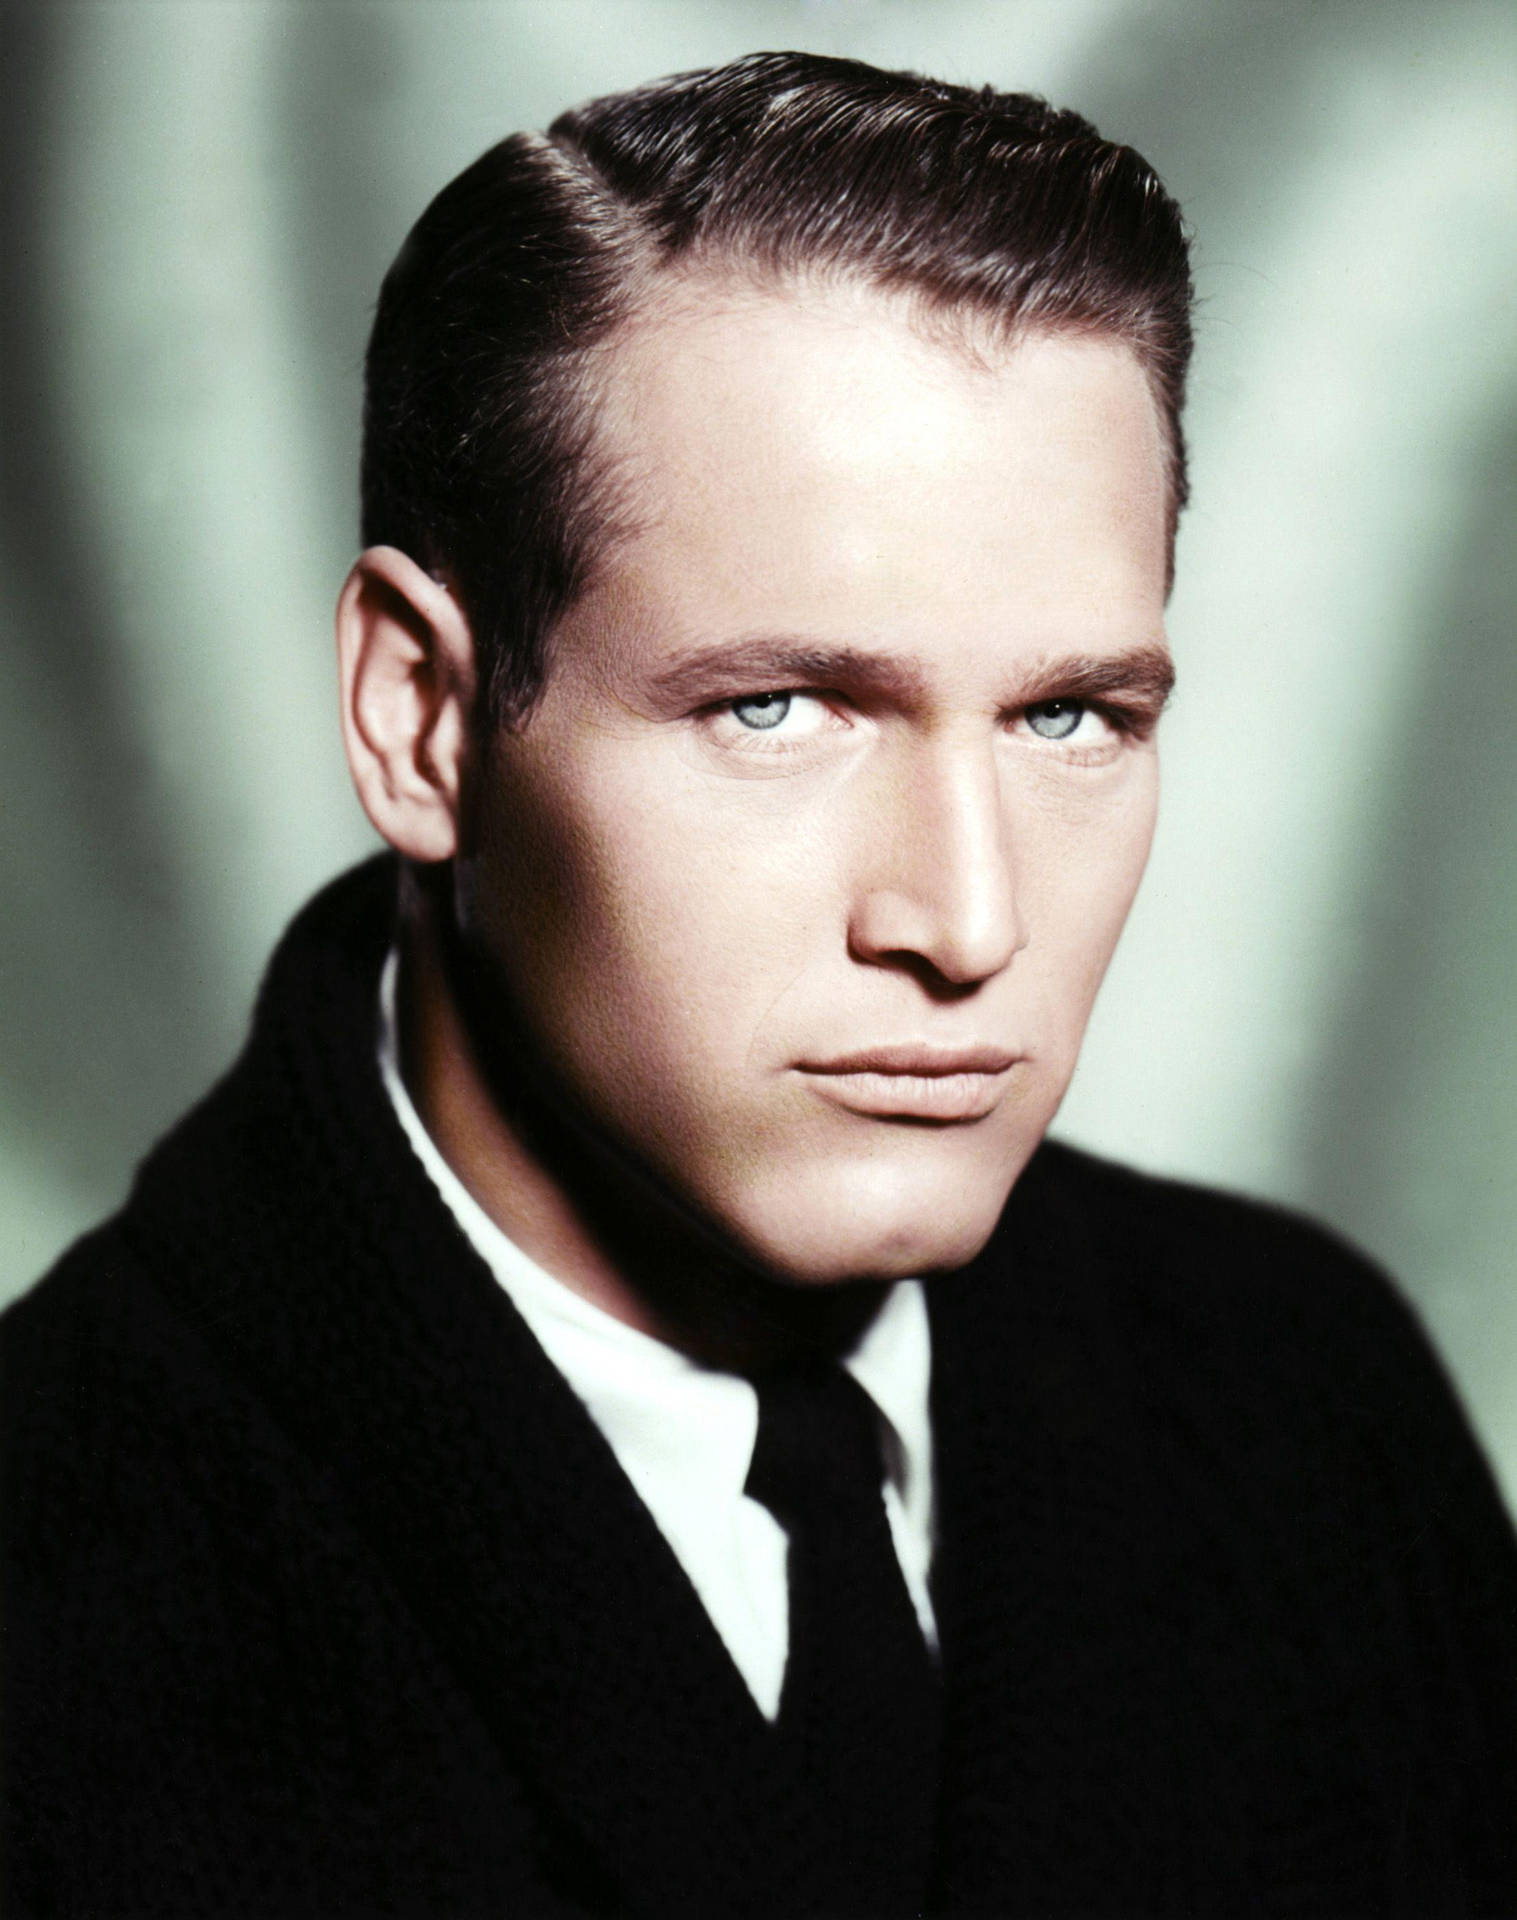 Legendarisk skuespiller Paul Newman til sejren! Wallpaper